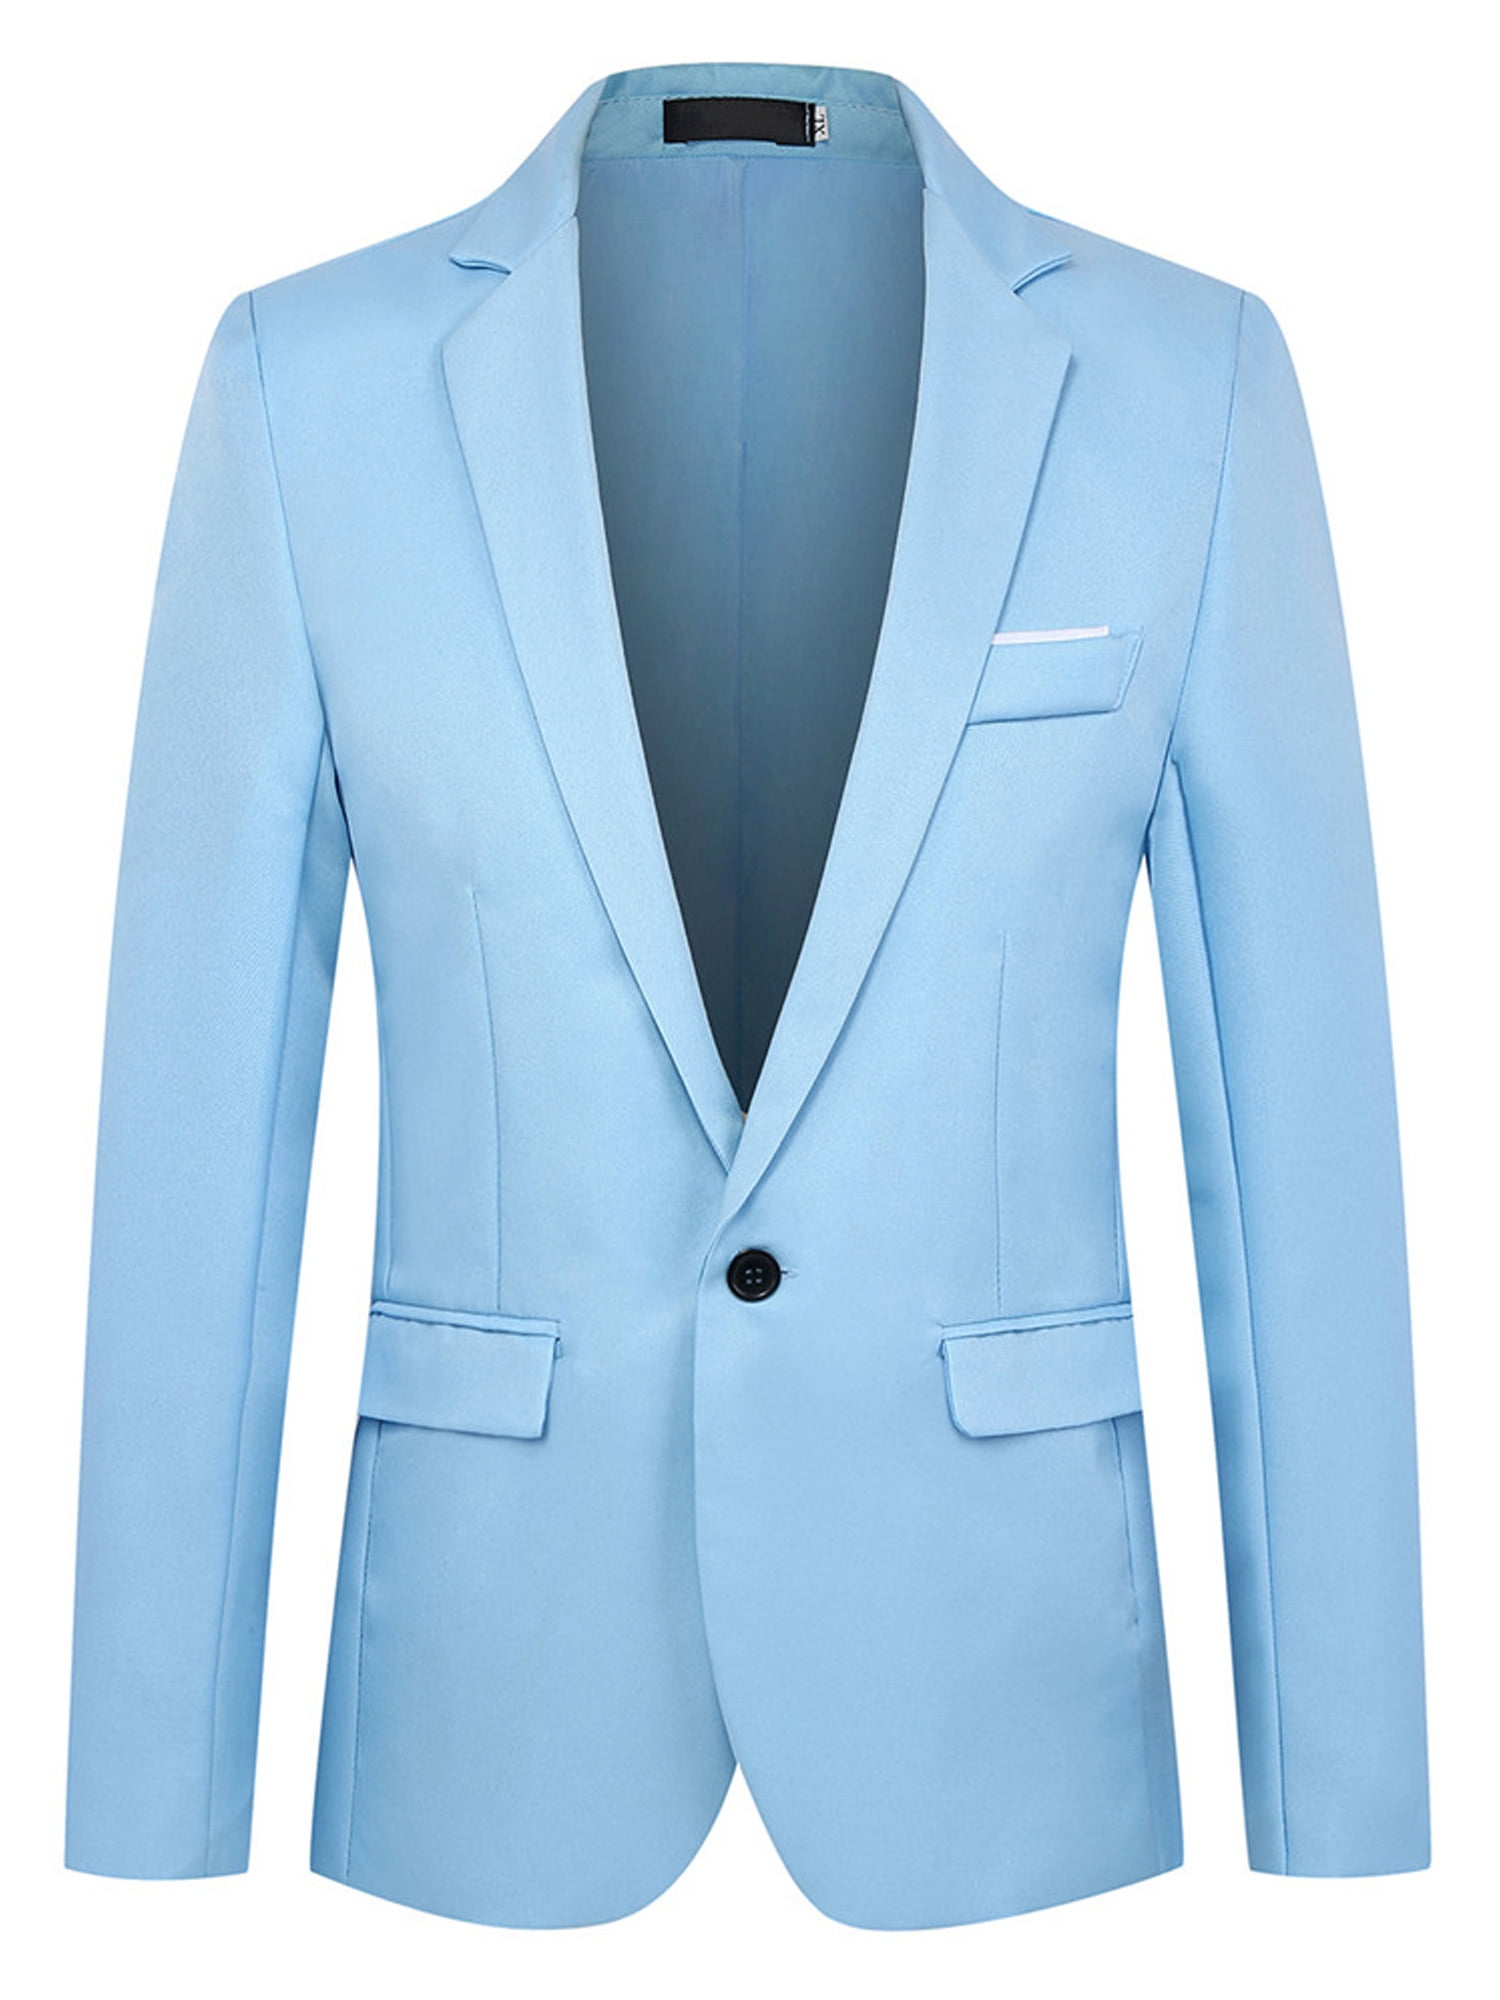 Men's Blazer Slim Fit Big &Tall Casual Solid Sport Coats Lightweight One Button Suit Jacket Coats Business Lapel Suit 